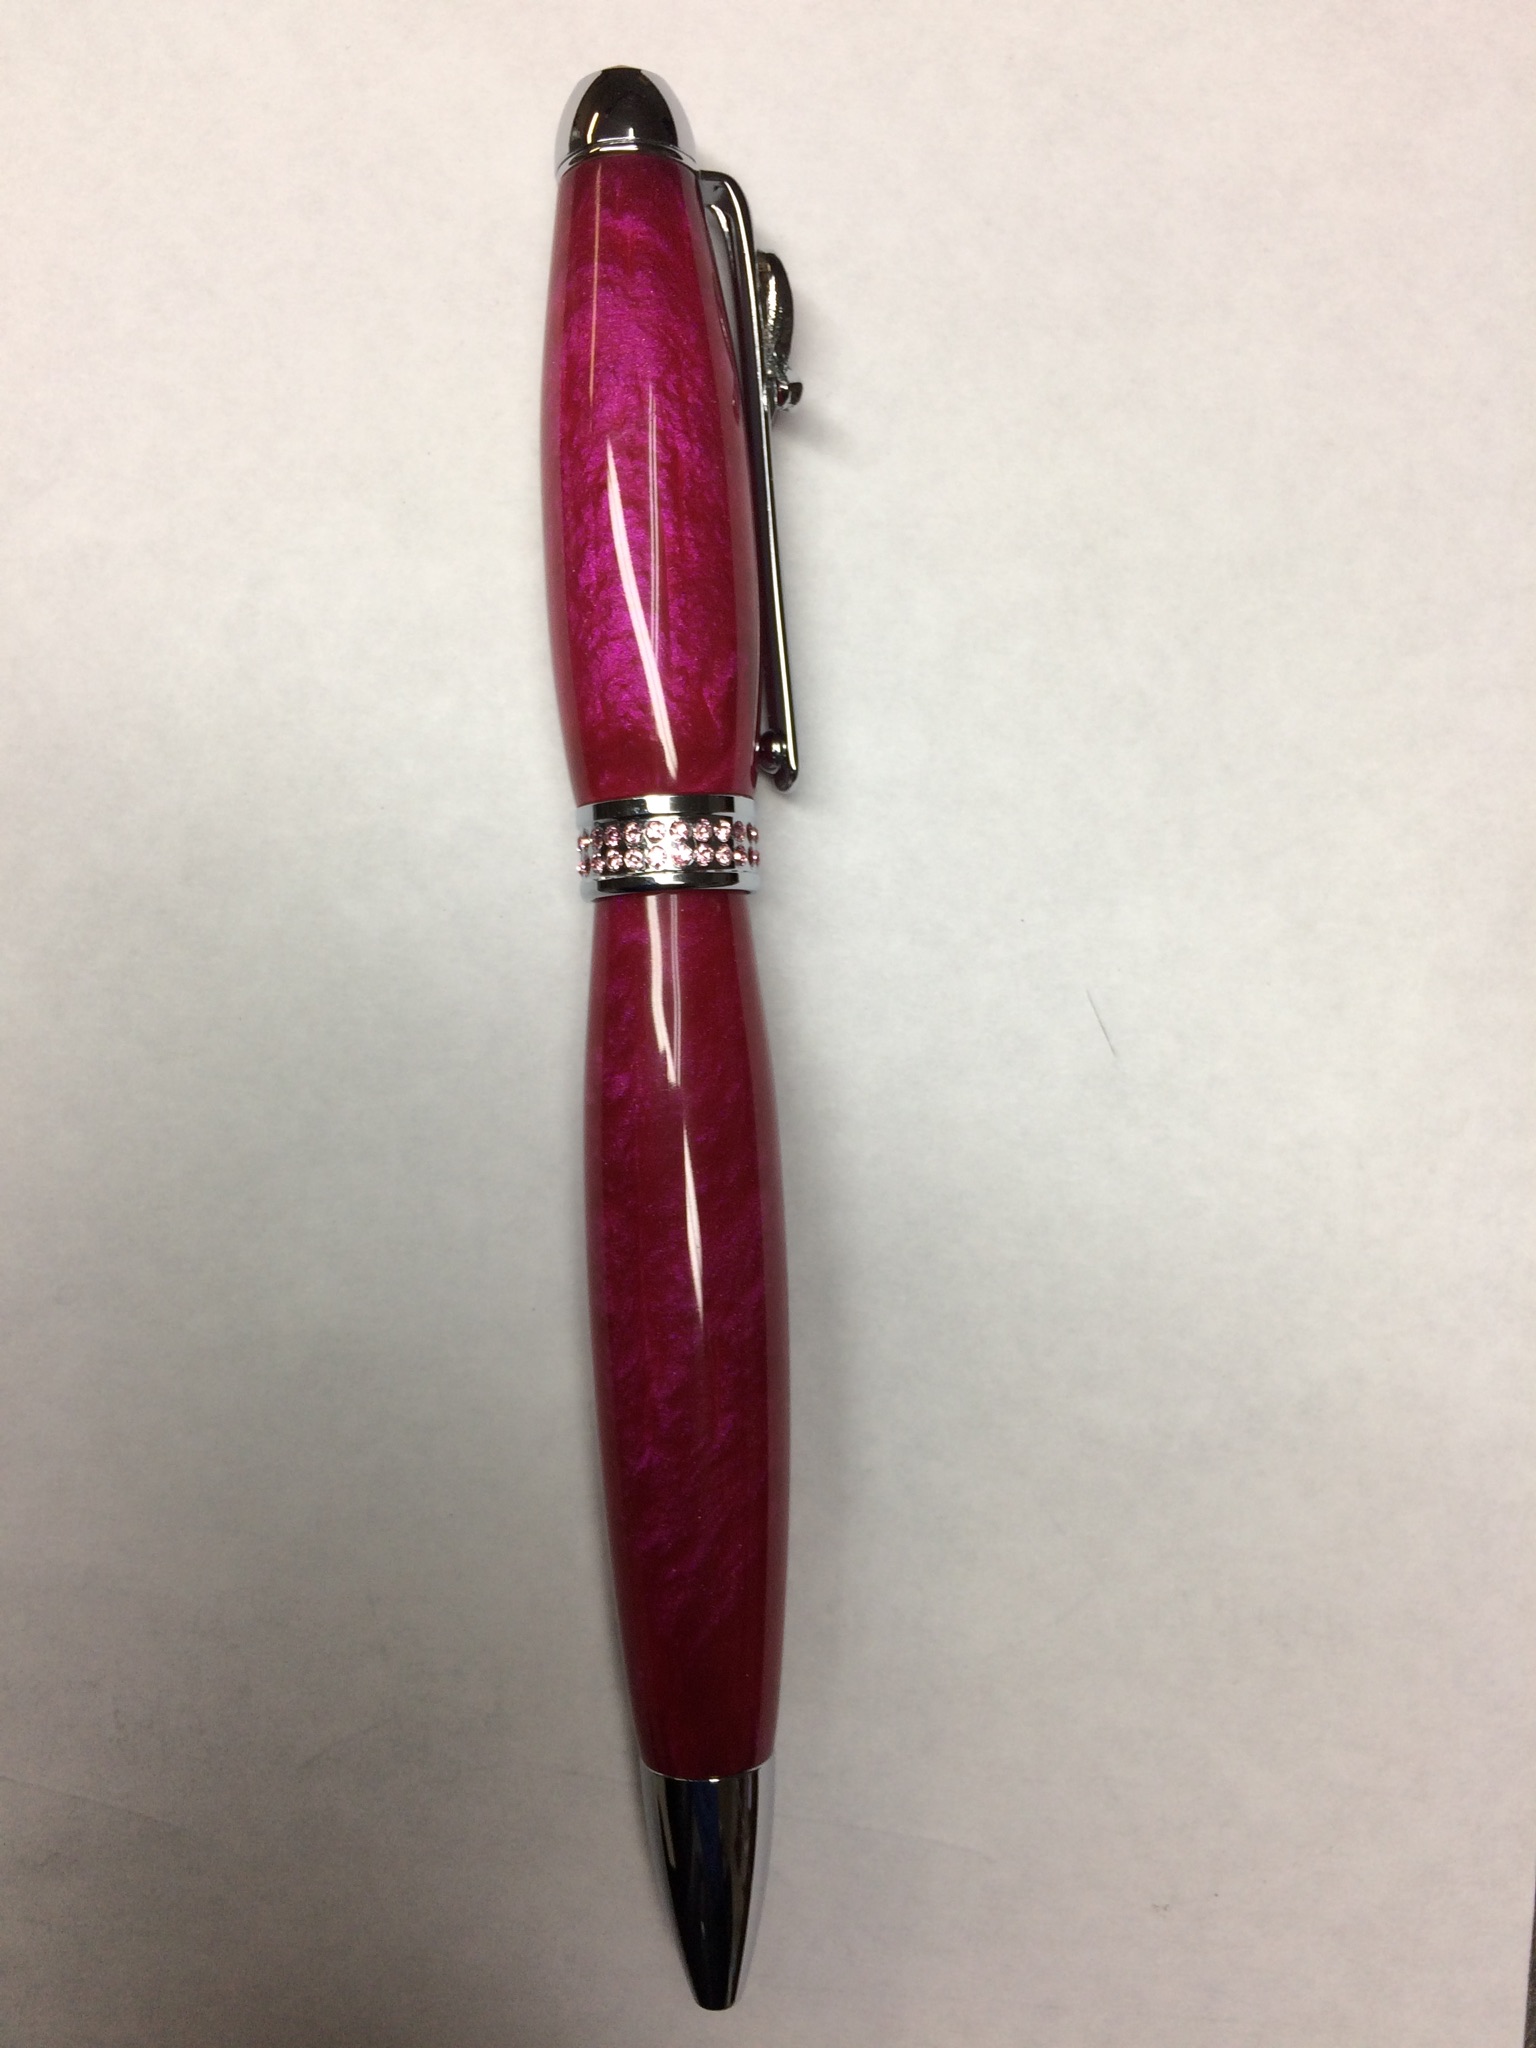 BCA Pen - pink extreme